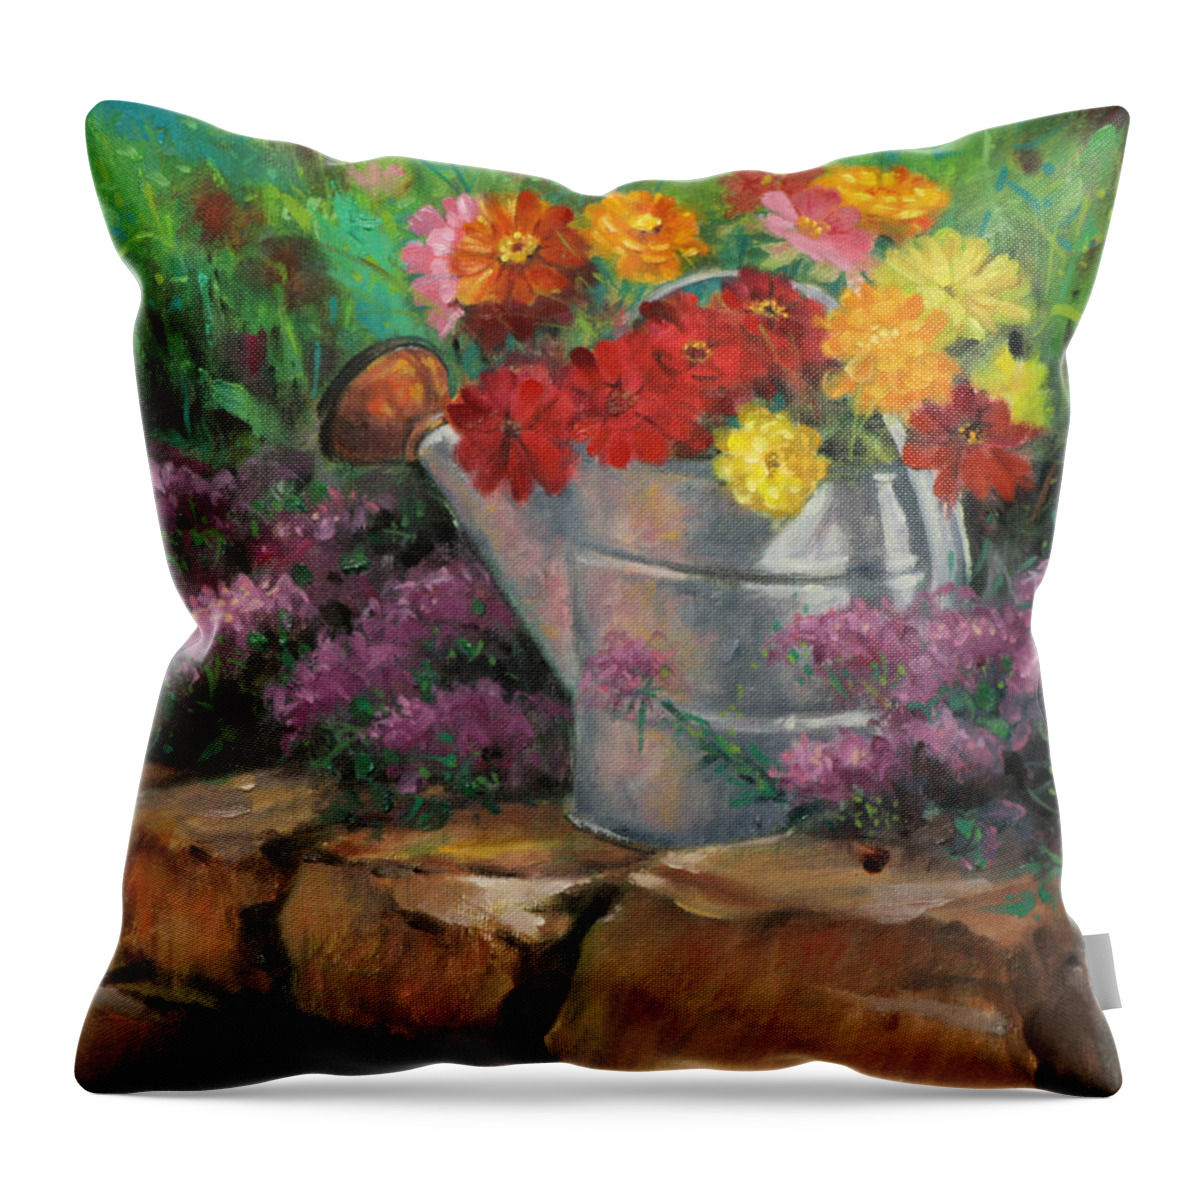 Garden Throw Pillow featuring the painting Garden Treasure by Linda Eades Blackburn